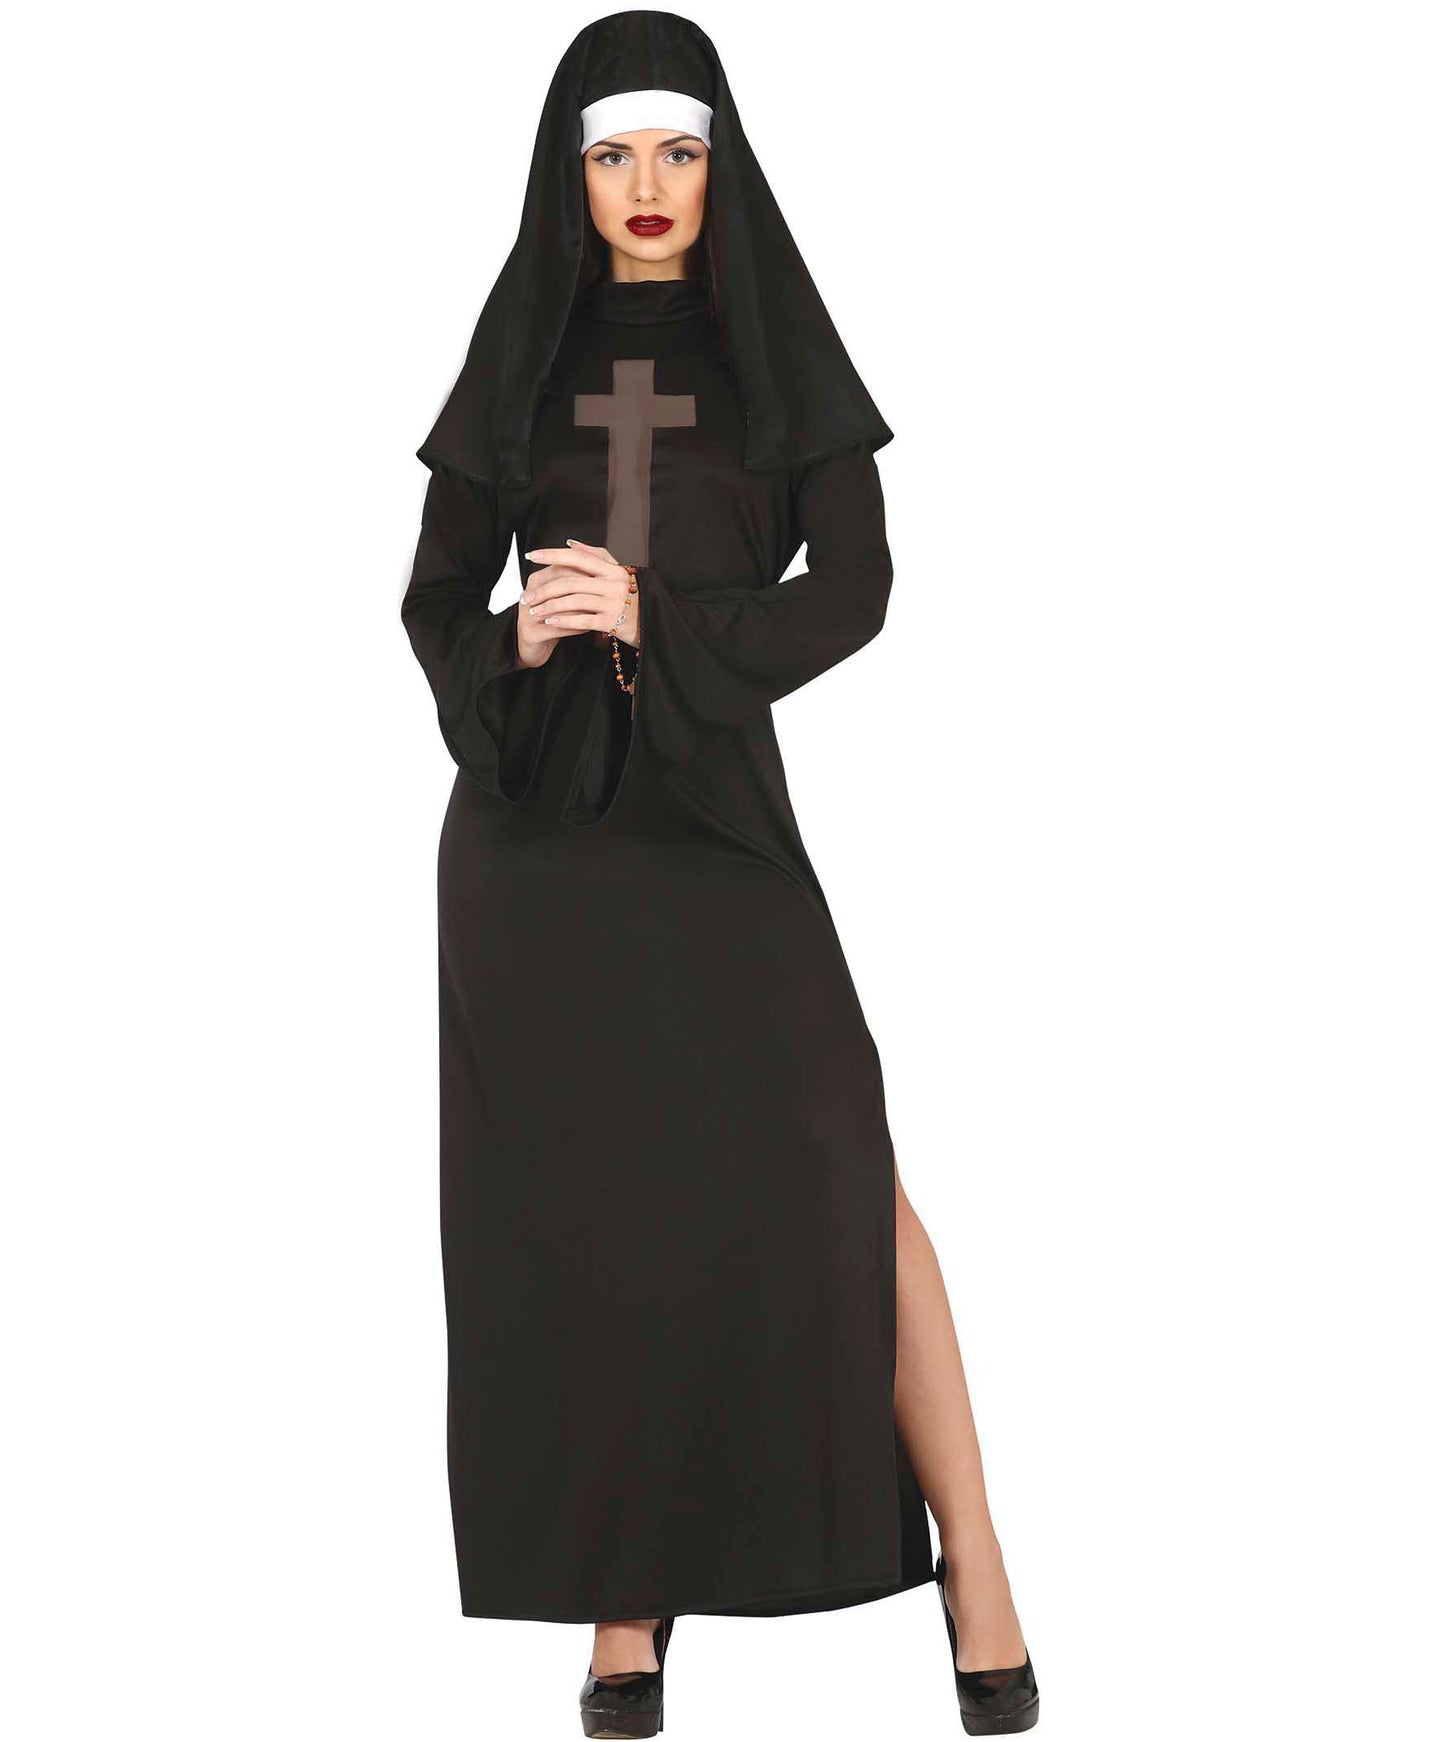 Bad Nun Costume